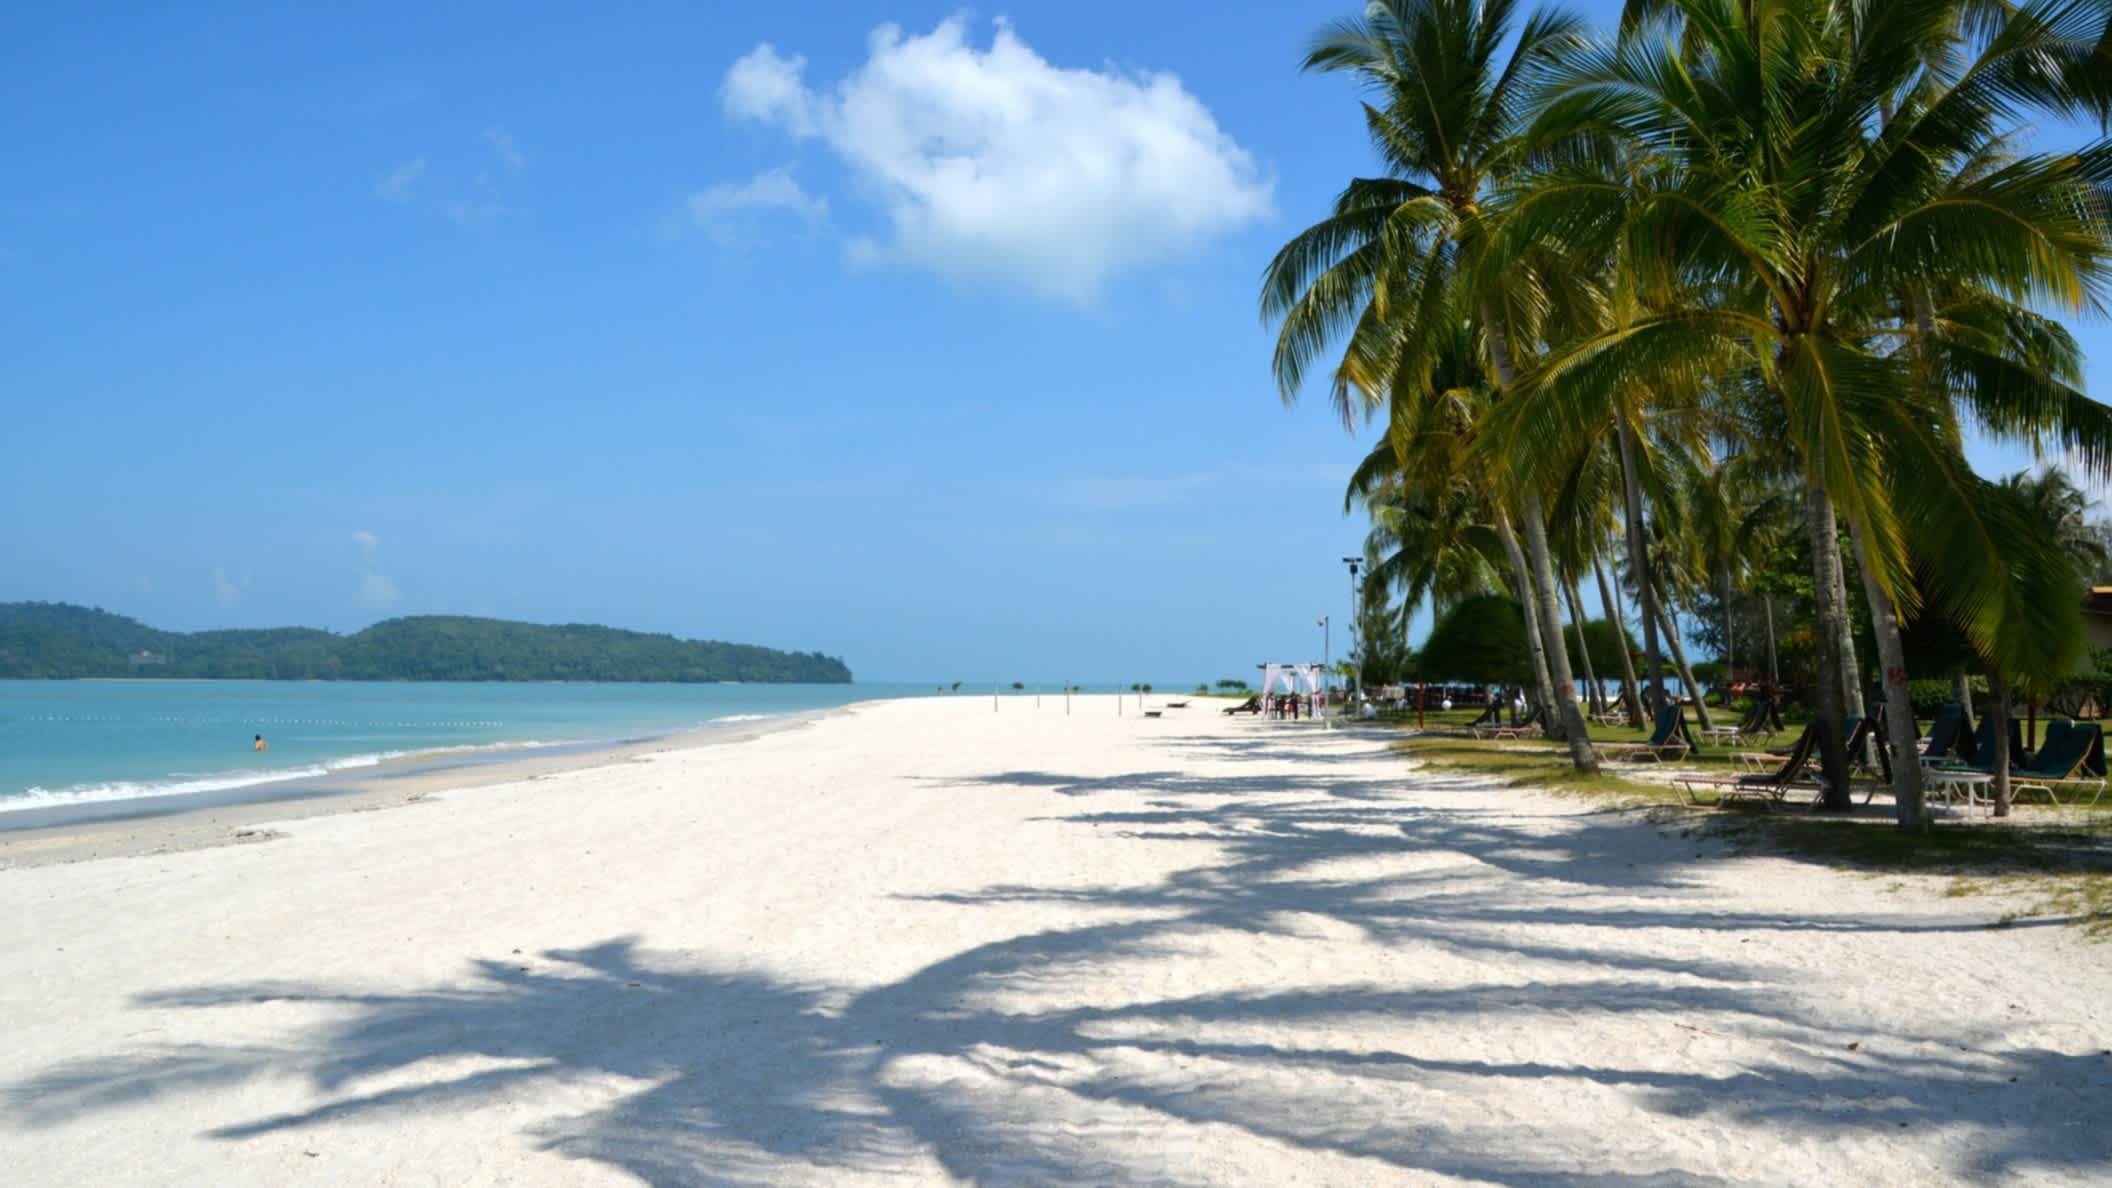 Palmen am weißen Sandstrand Pantai Cenang beach, Langkawi, Malaysia bei purem Sonnenschein.